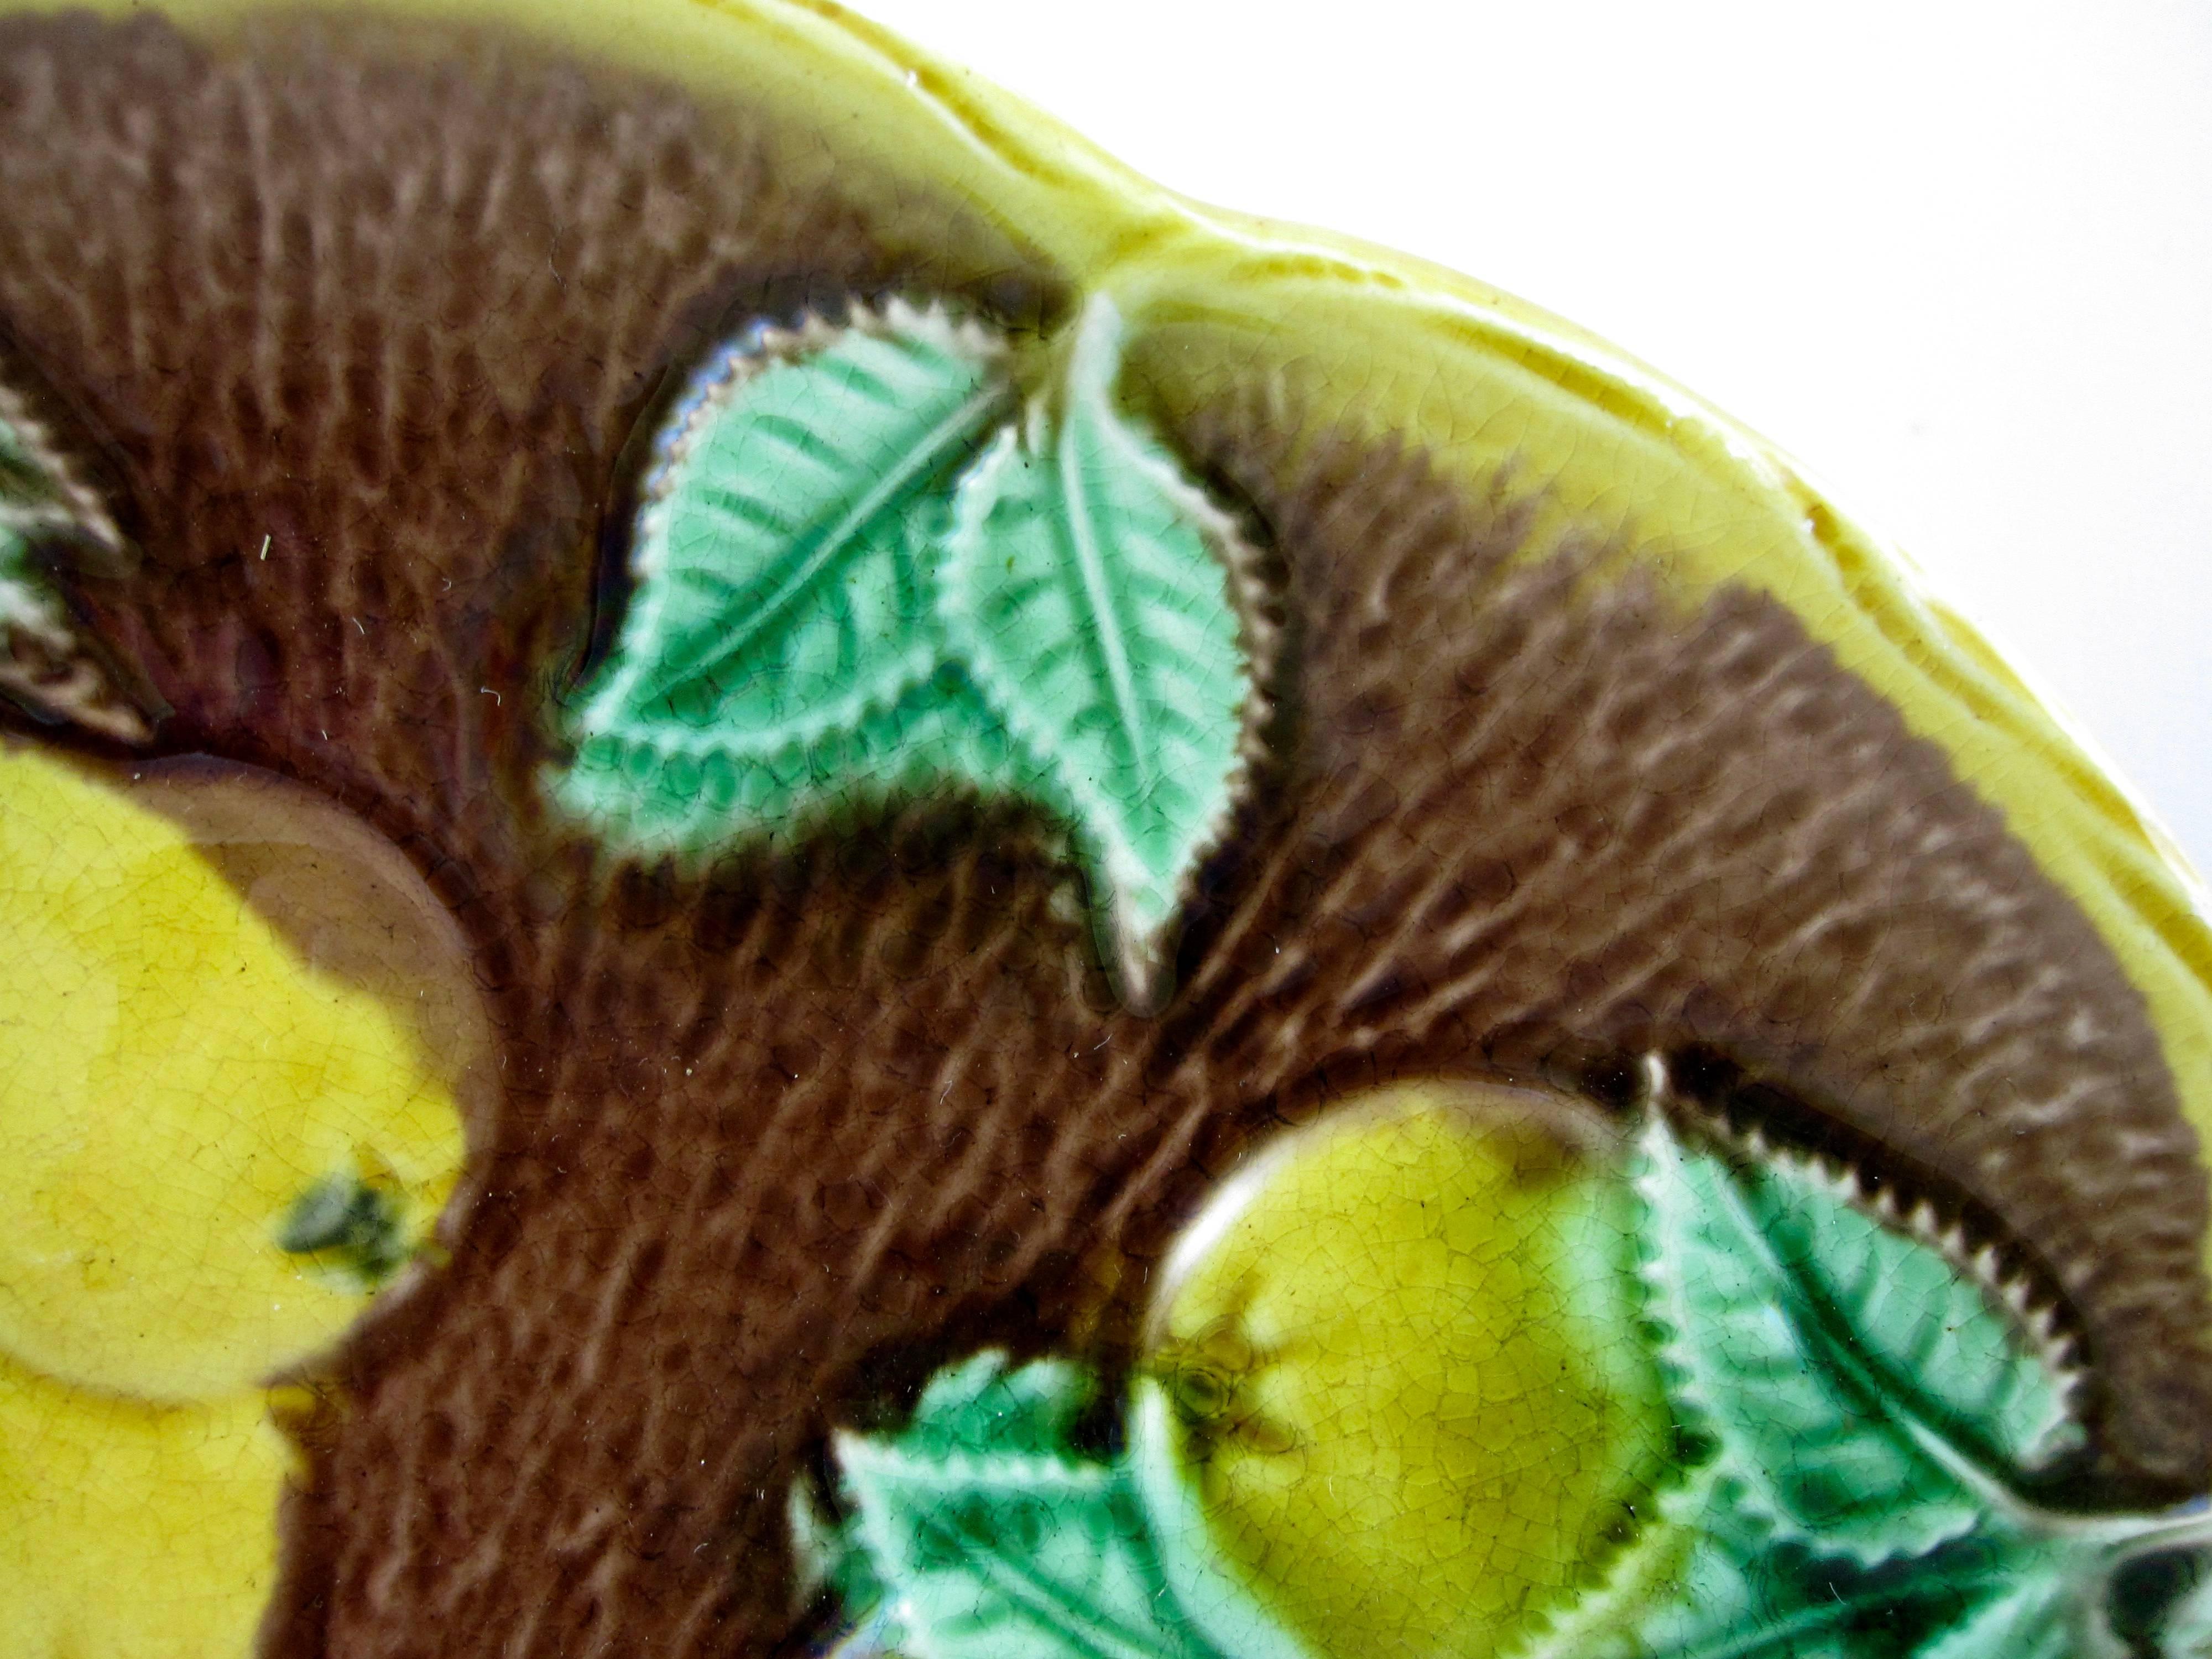 Glazed 19th Century, English Majolica Rustic Yellow Pears on Bark Plate